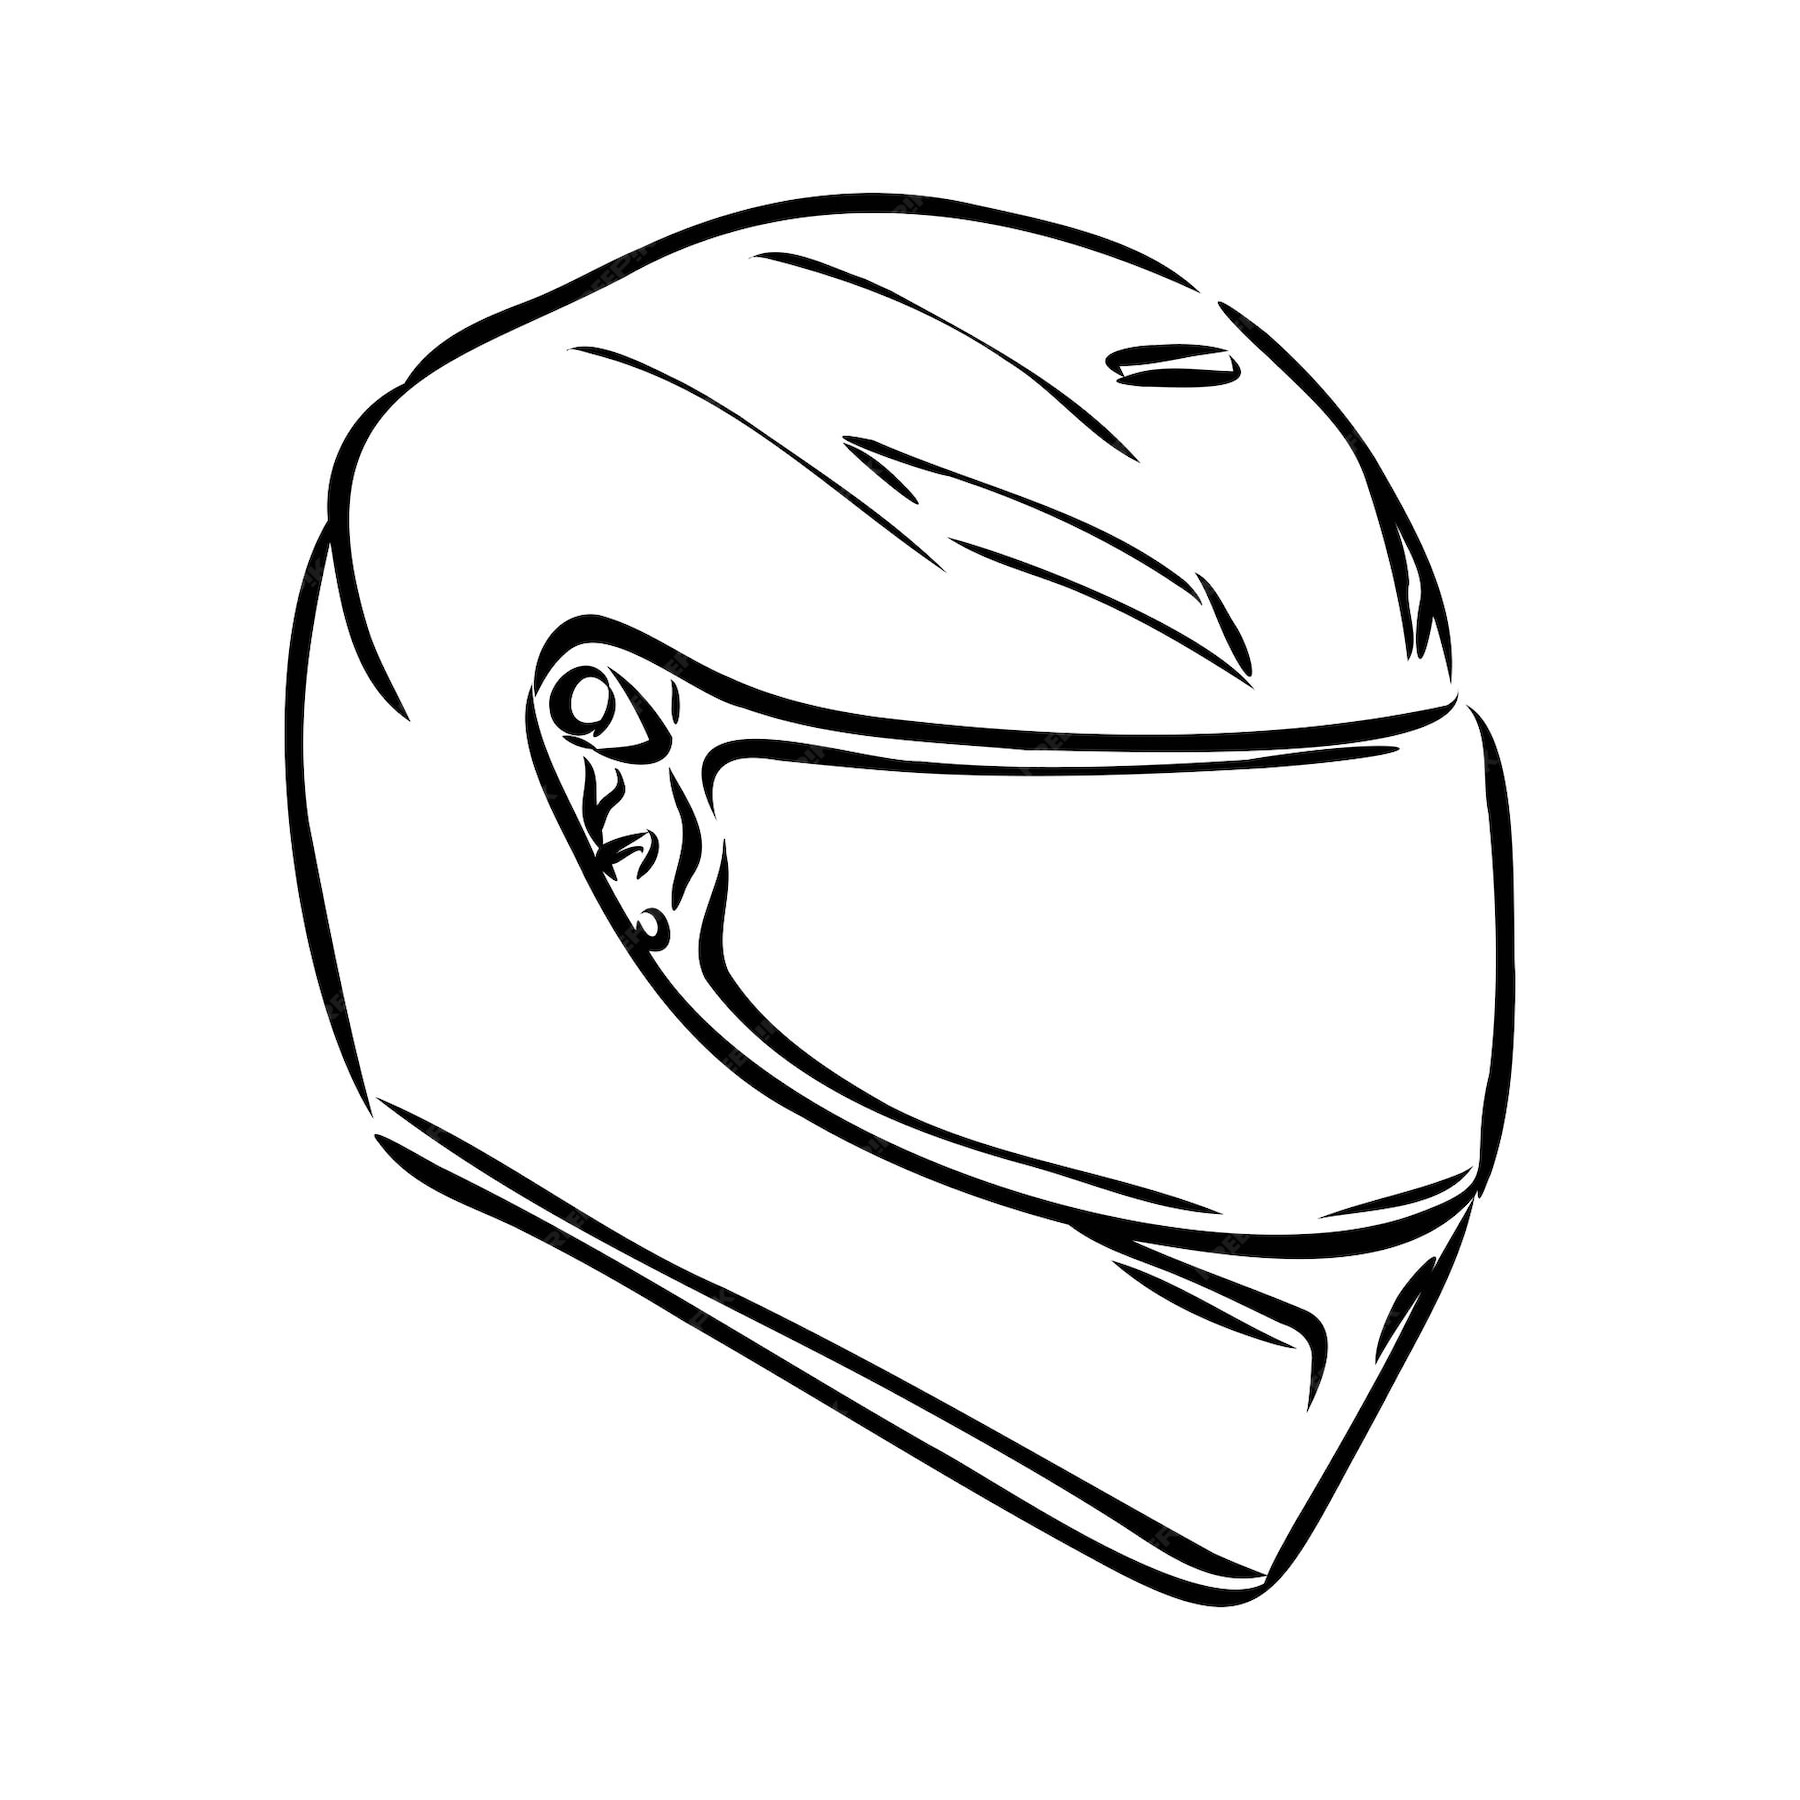 Premium Vector Motorcycle helmet hand drawn outline doodle icon